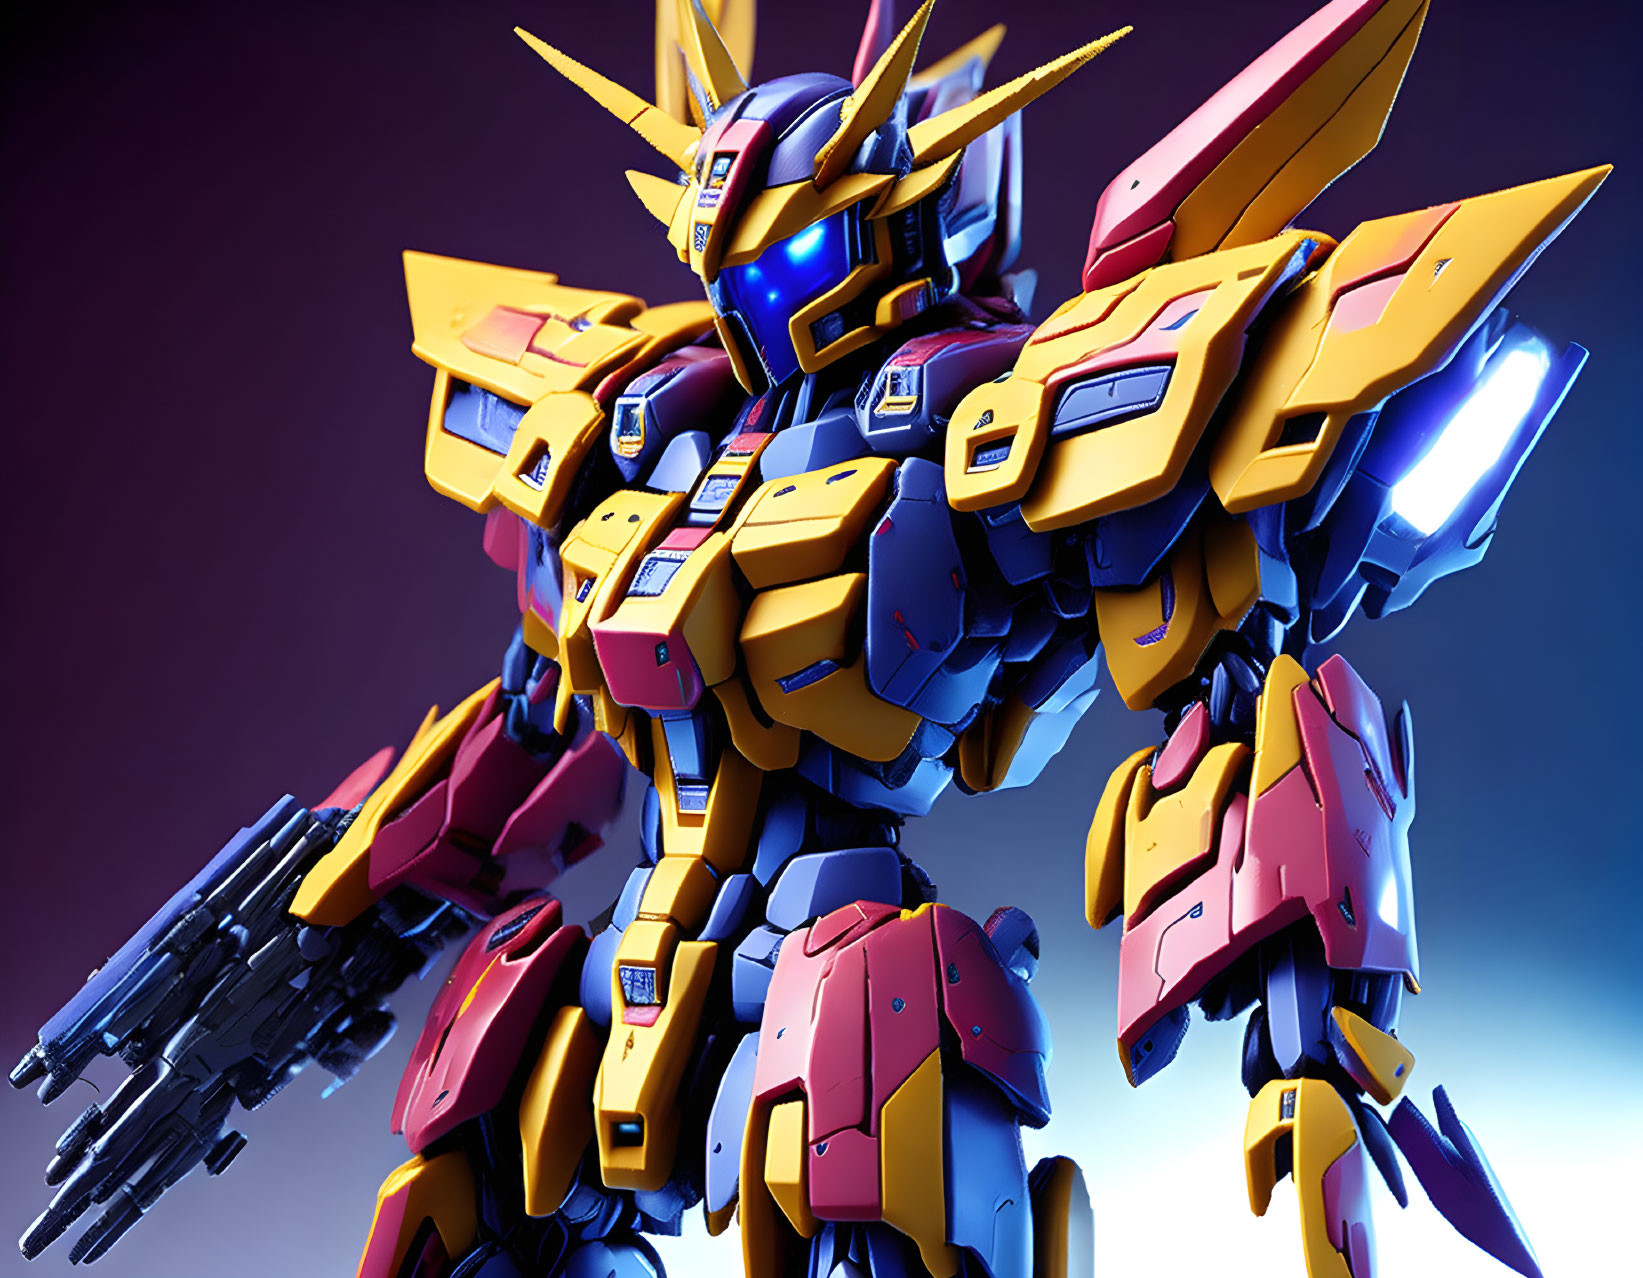 Gundam Model